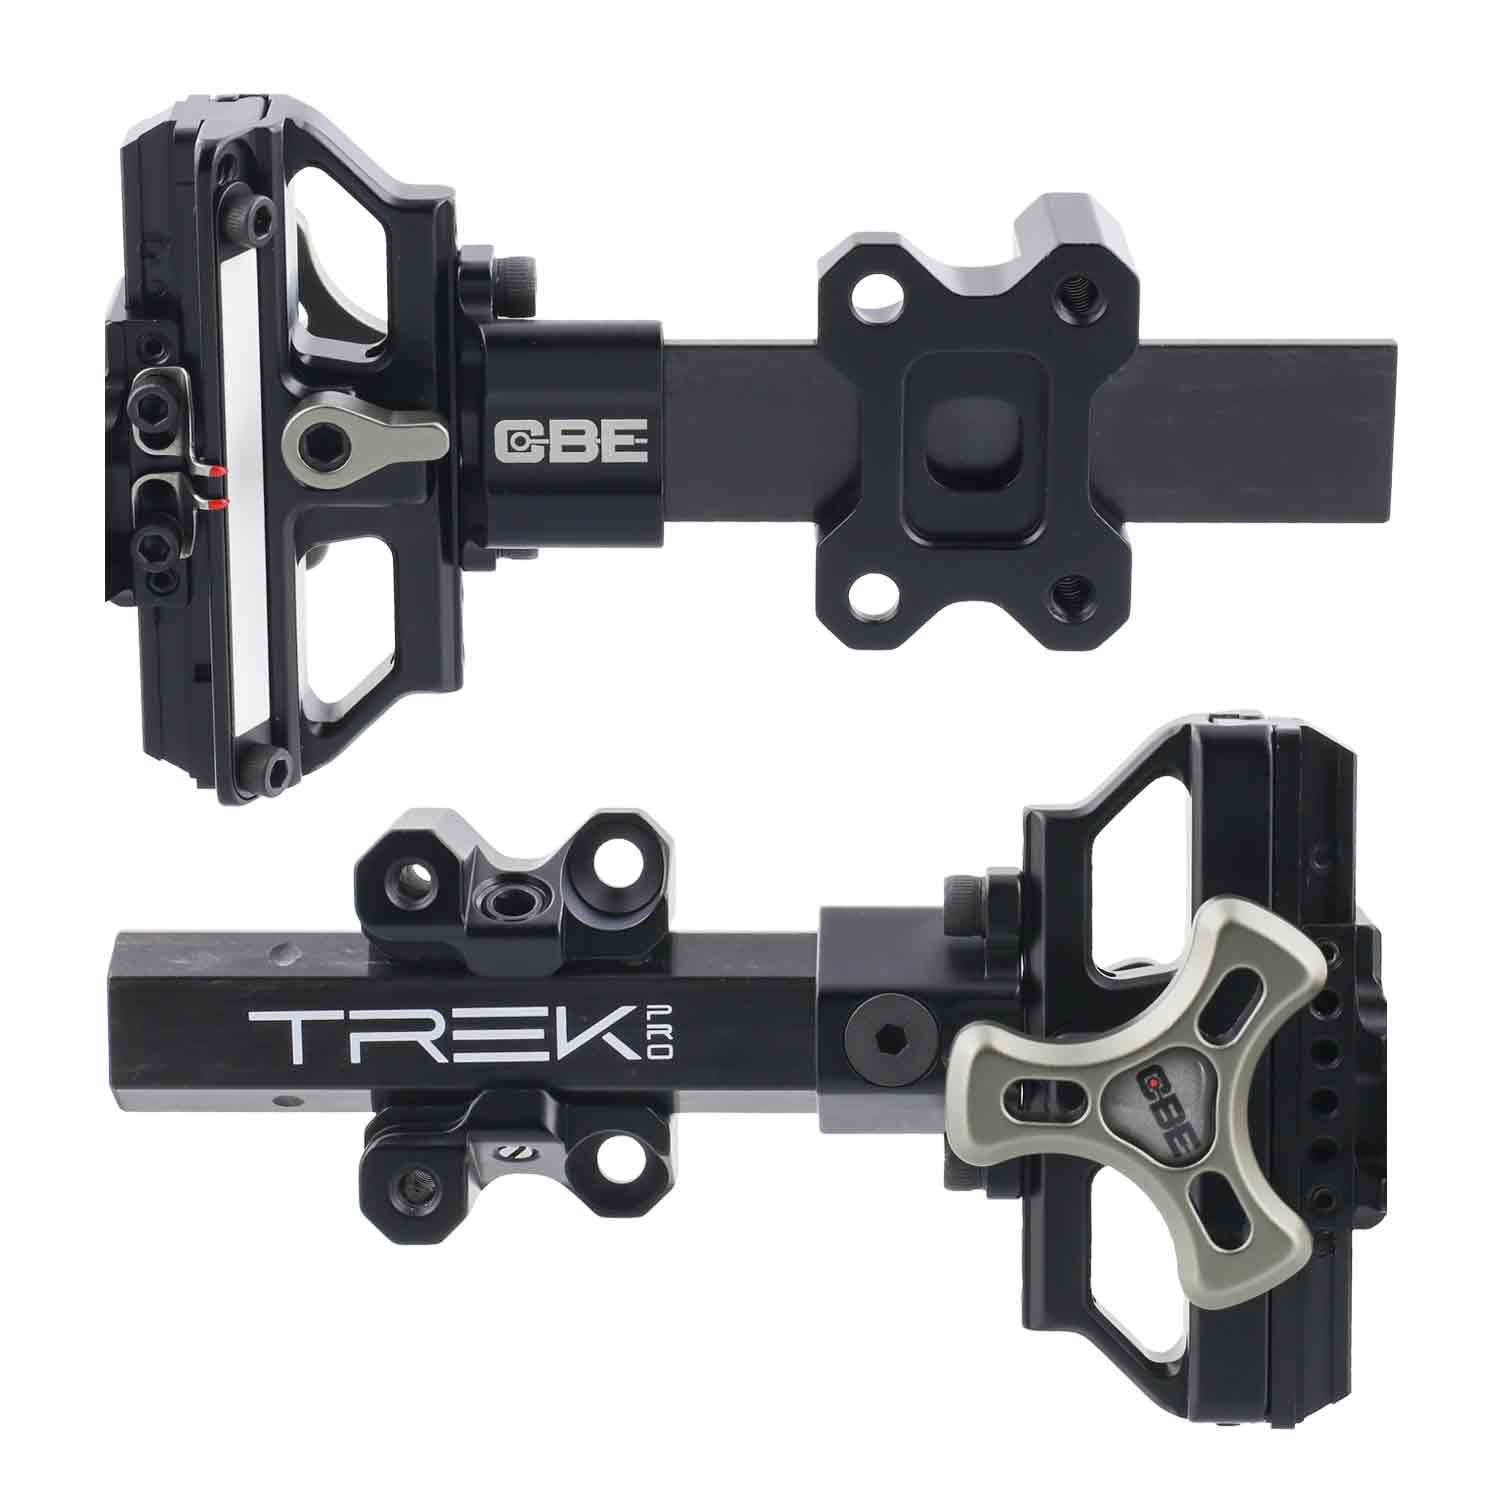 CBE TREK Pro Micro 3V Dovetail Sight (Open Box X1036133)